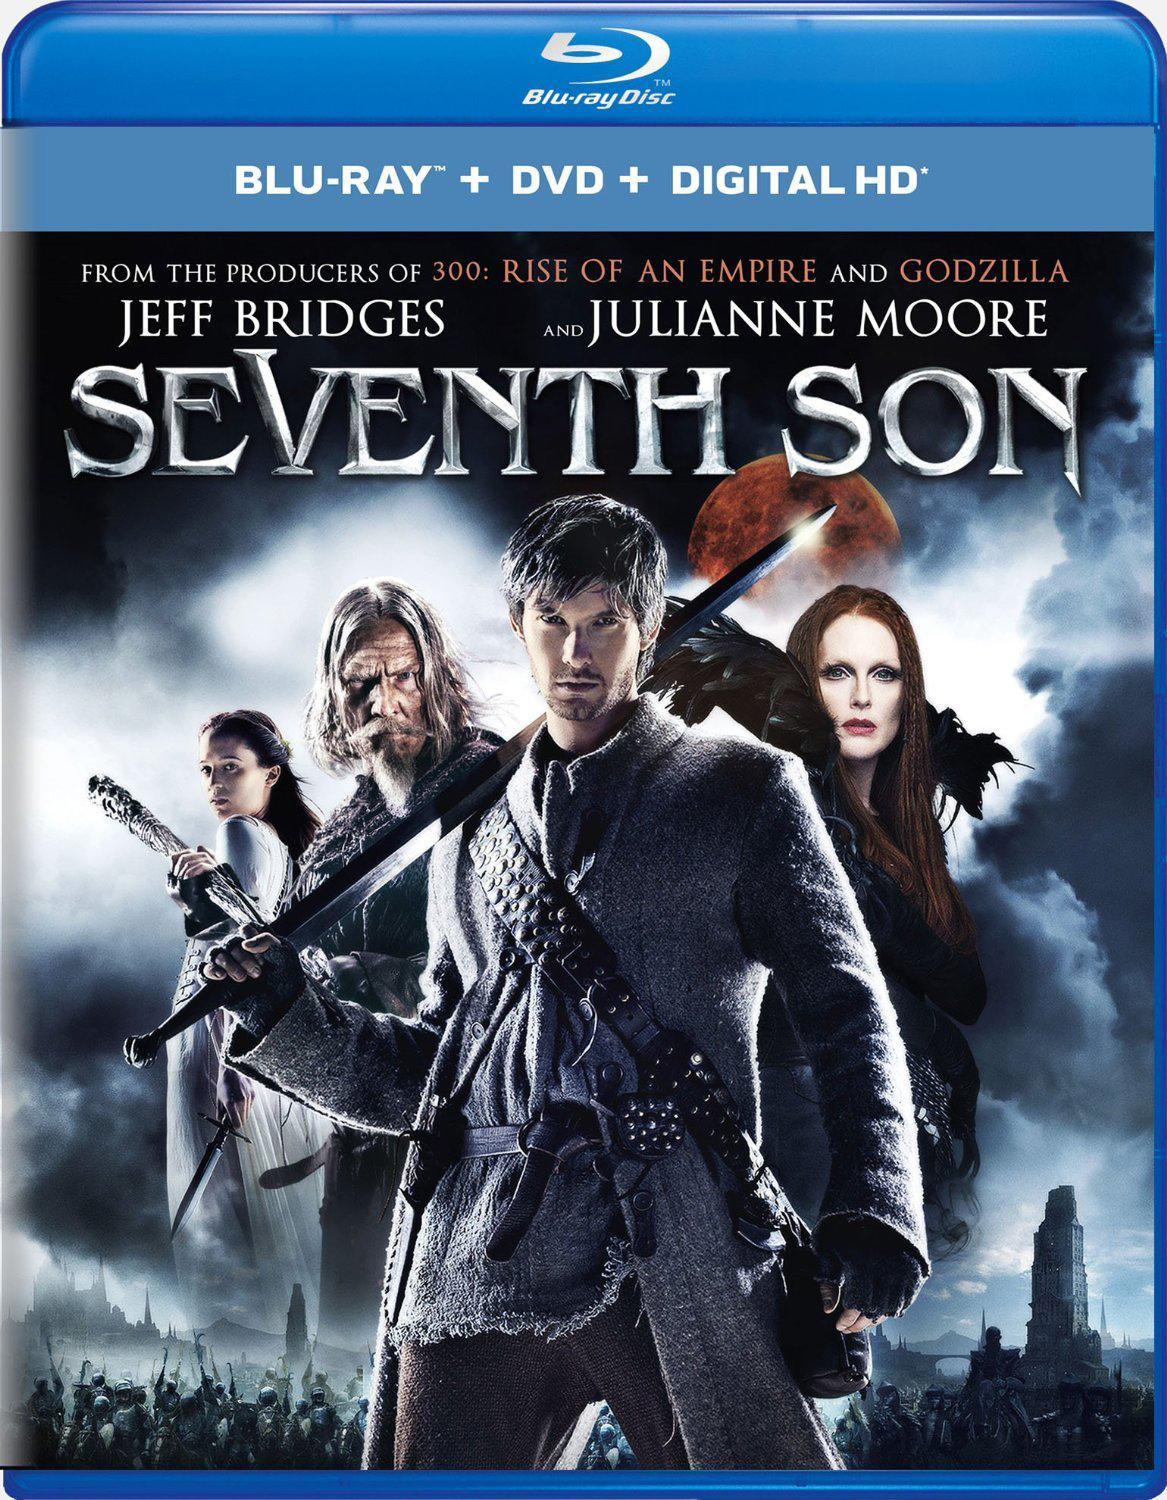 Seventh Son - Blu-ray Movie Review